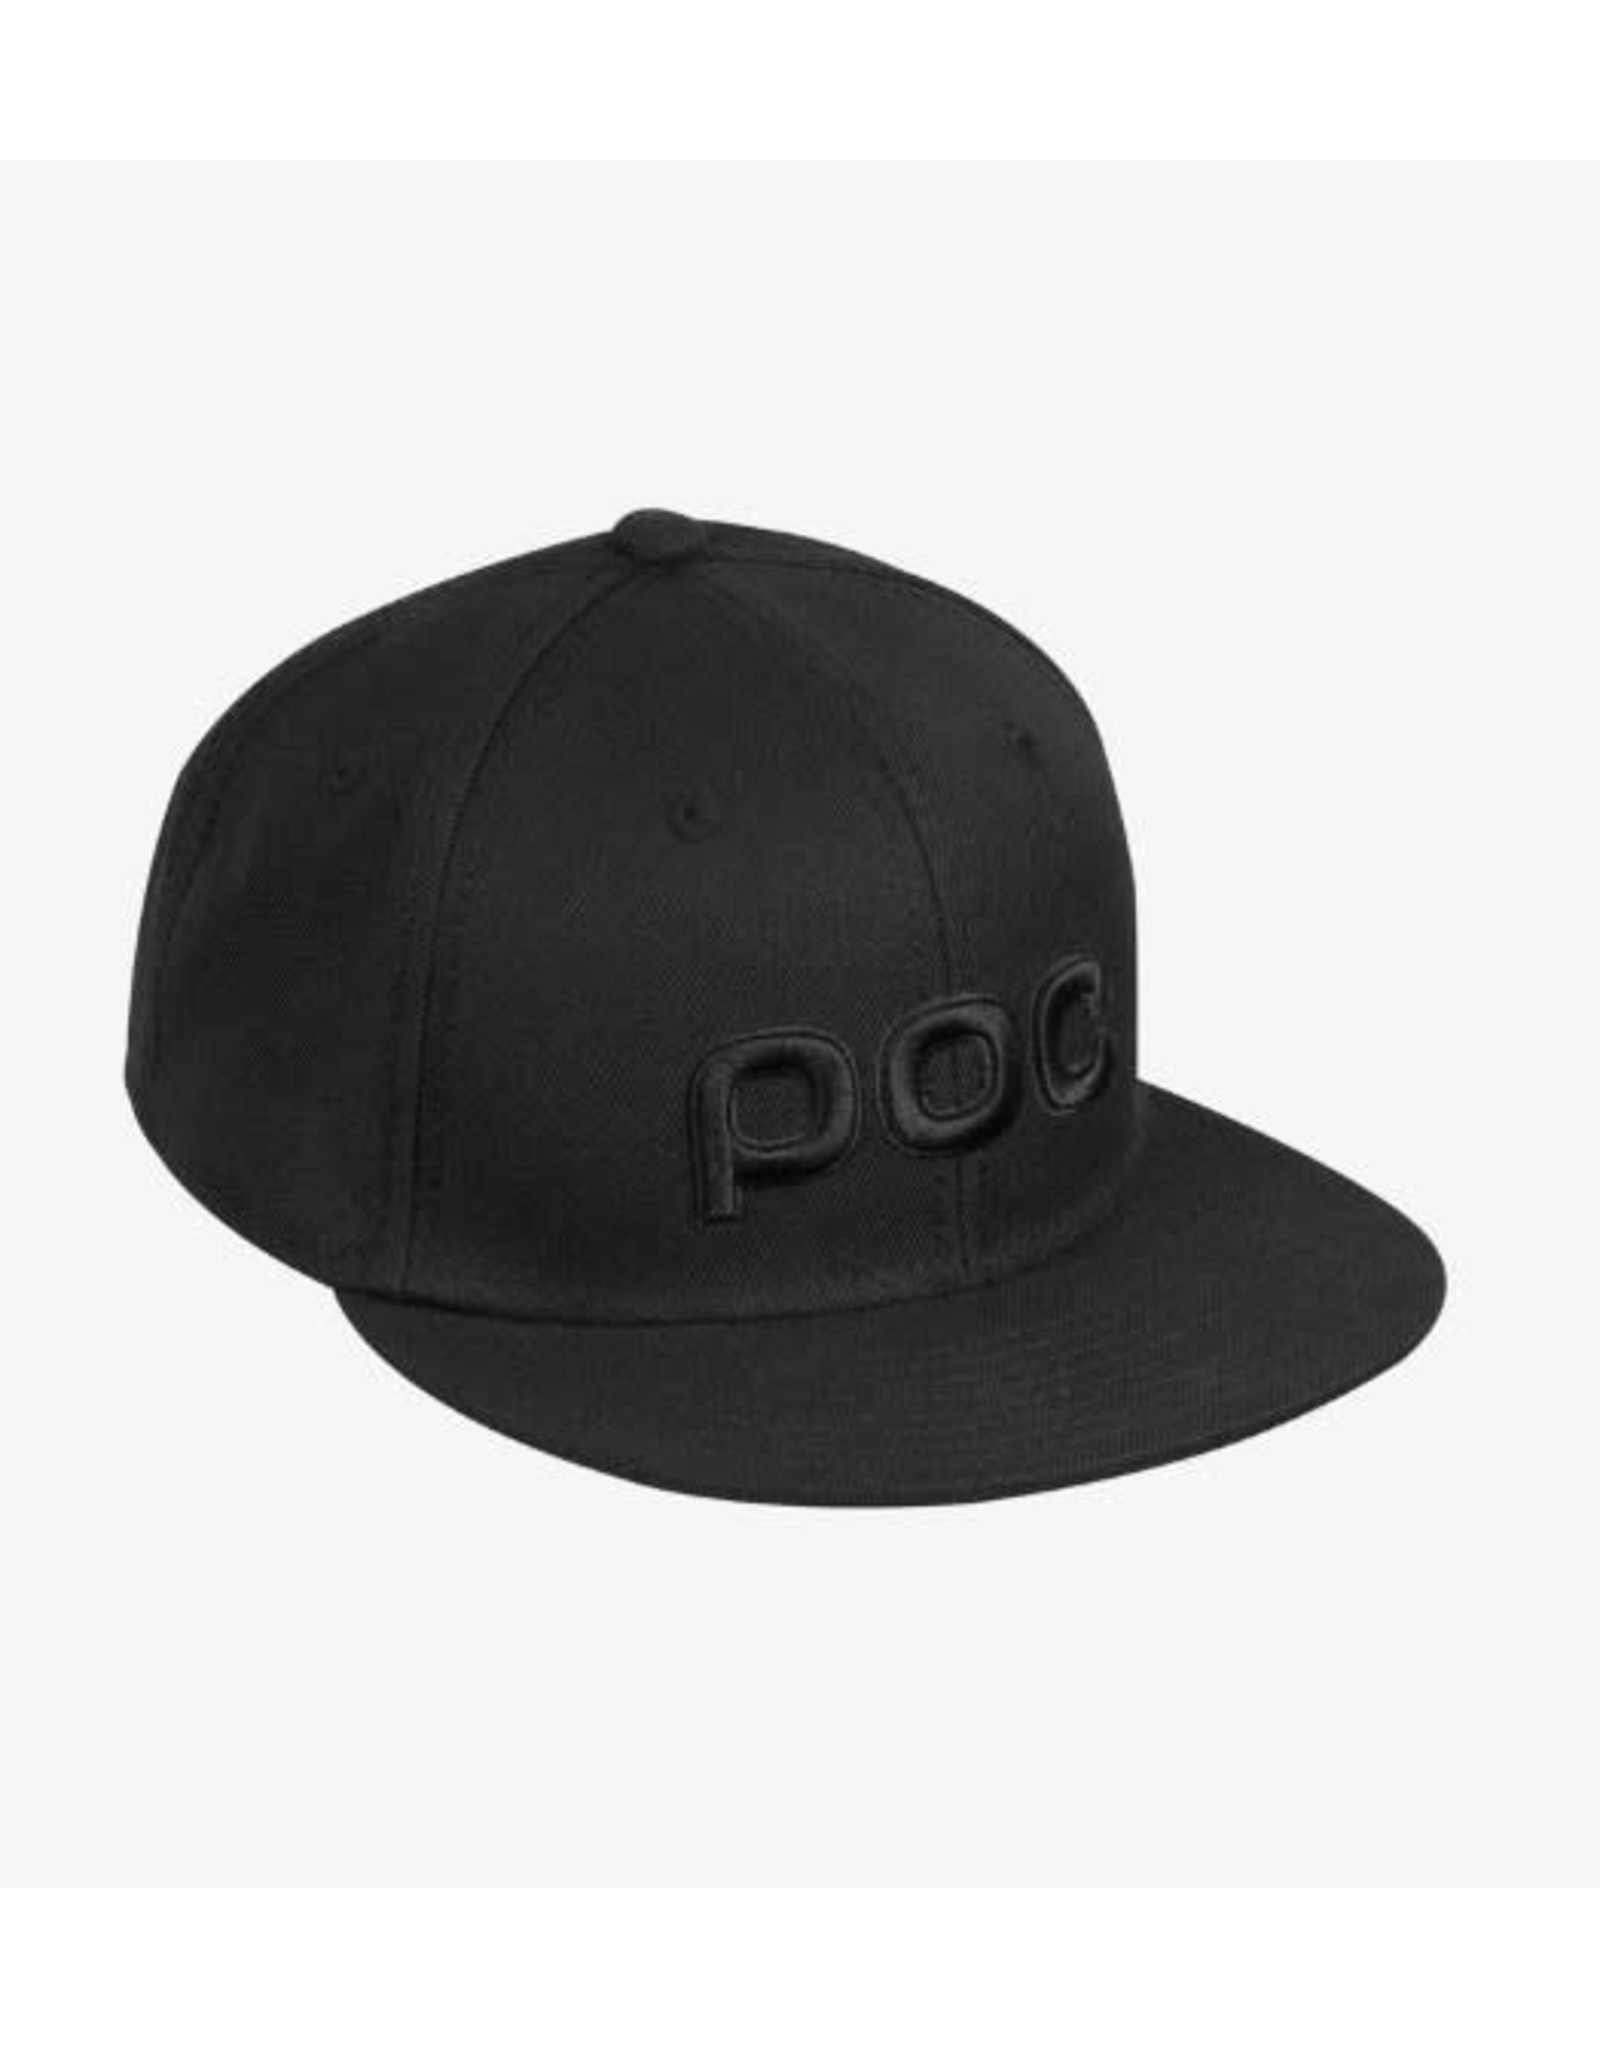 POC POC Corp Cap one size